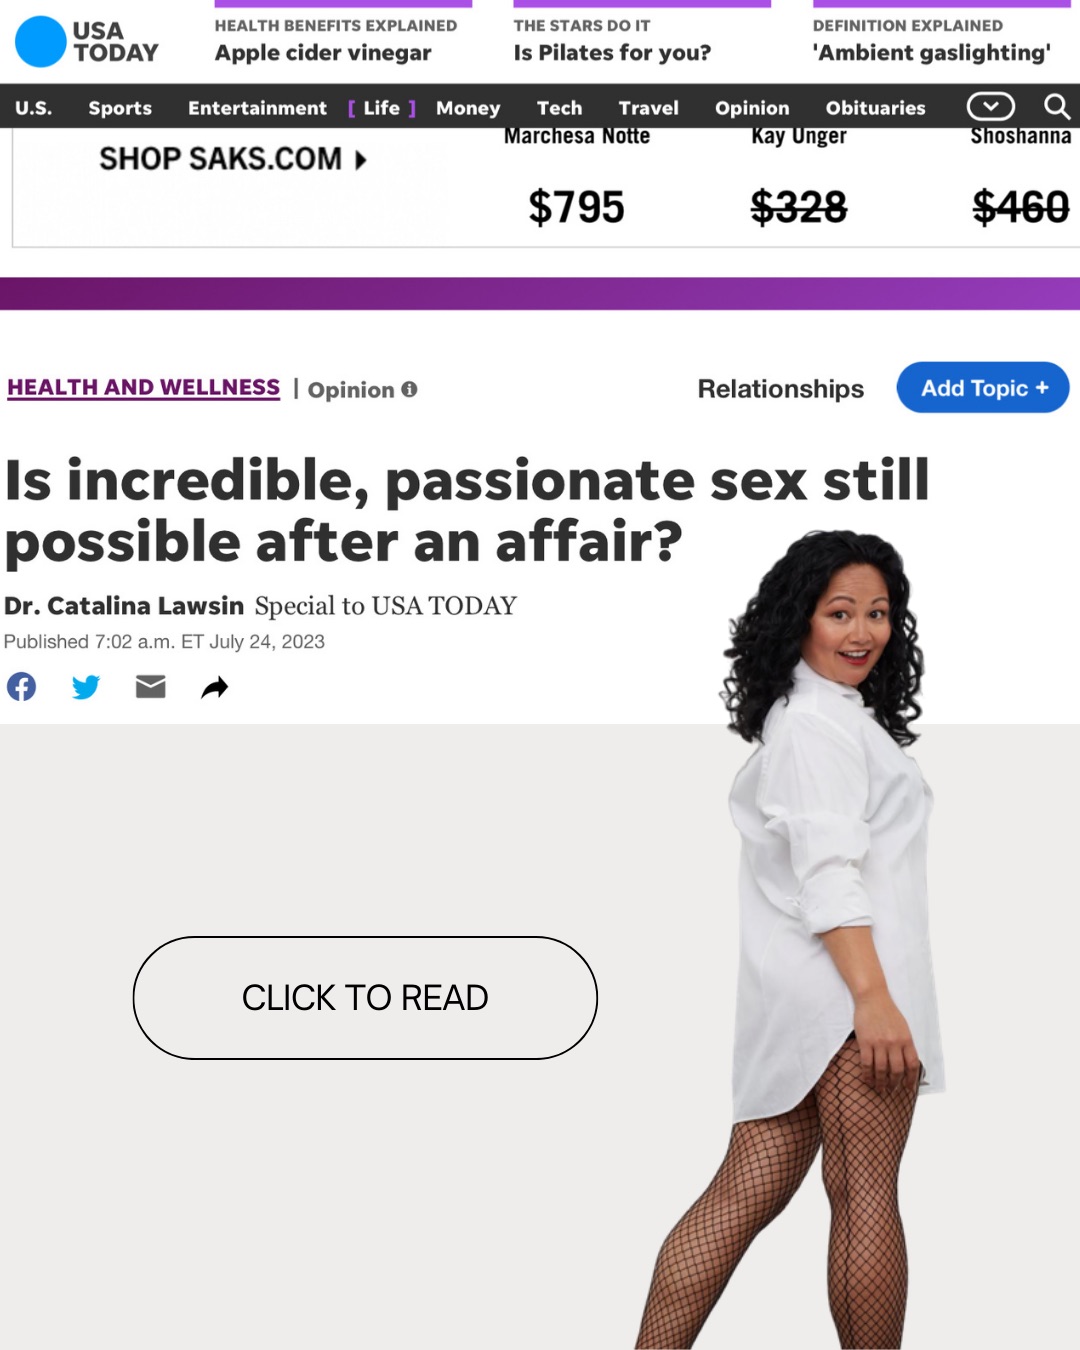 Passionate sex after an affairr